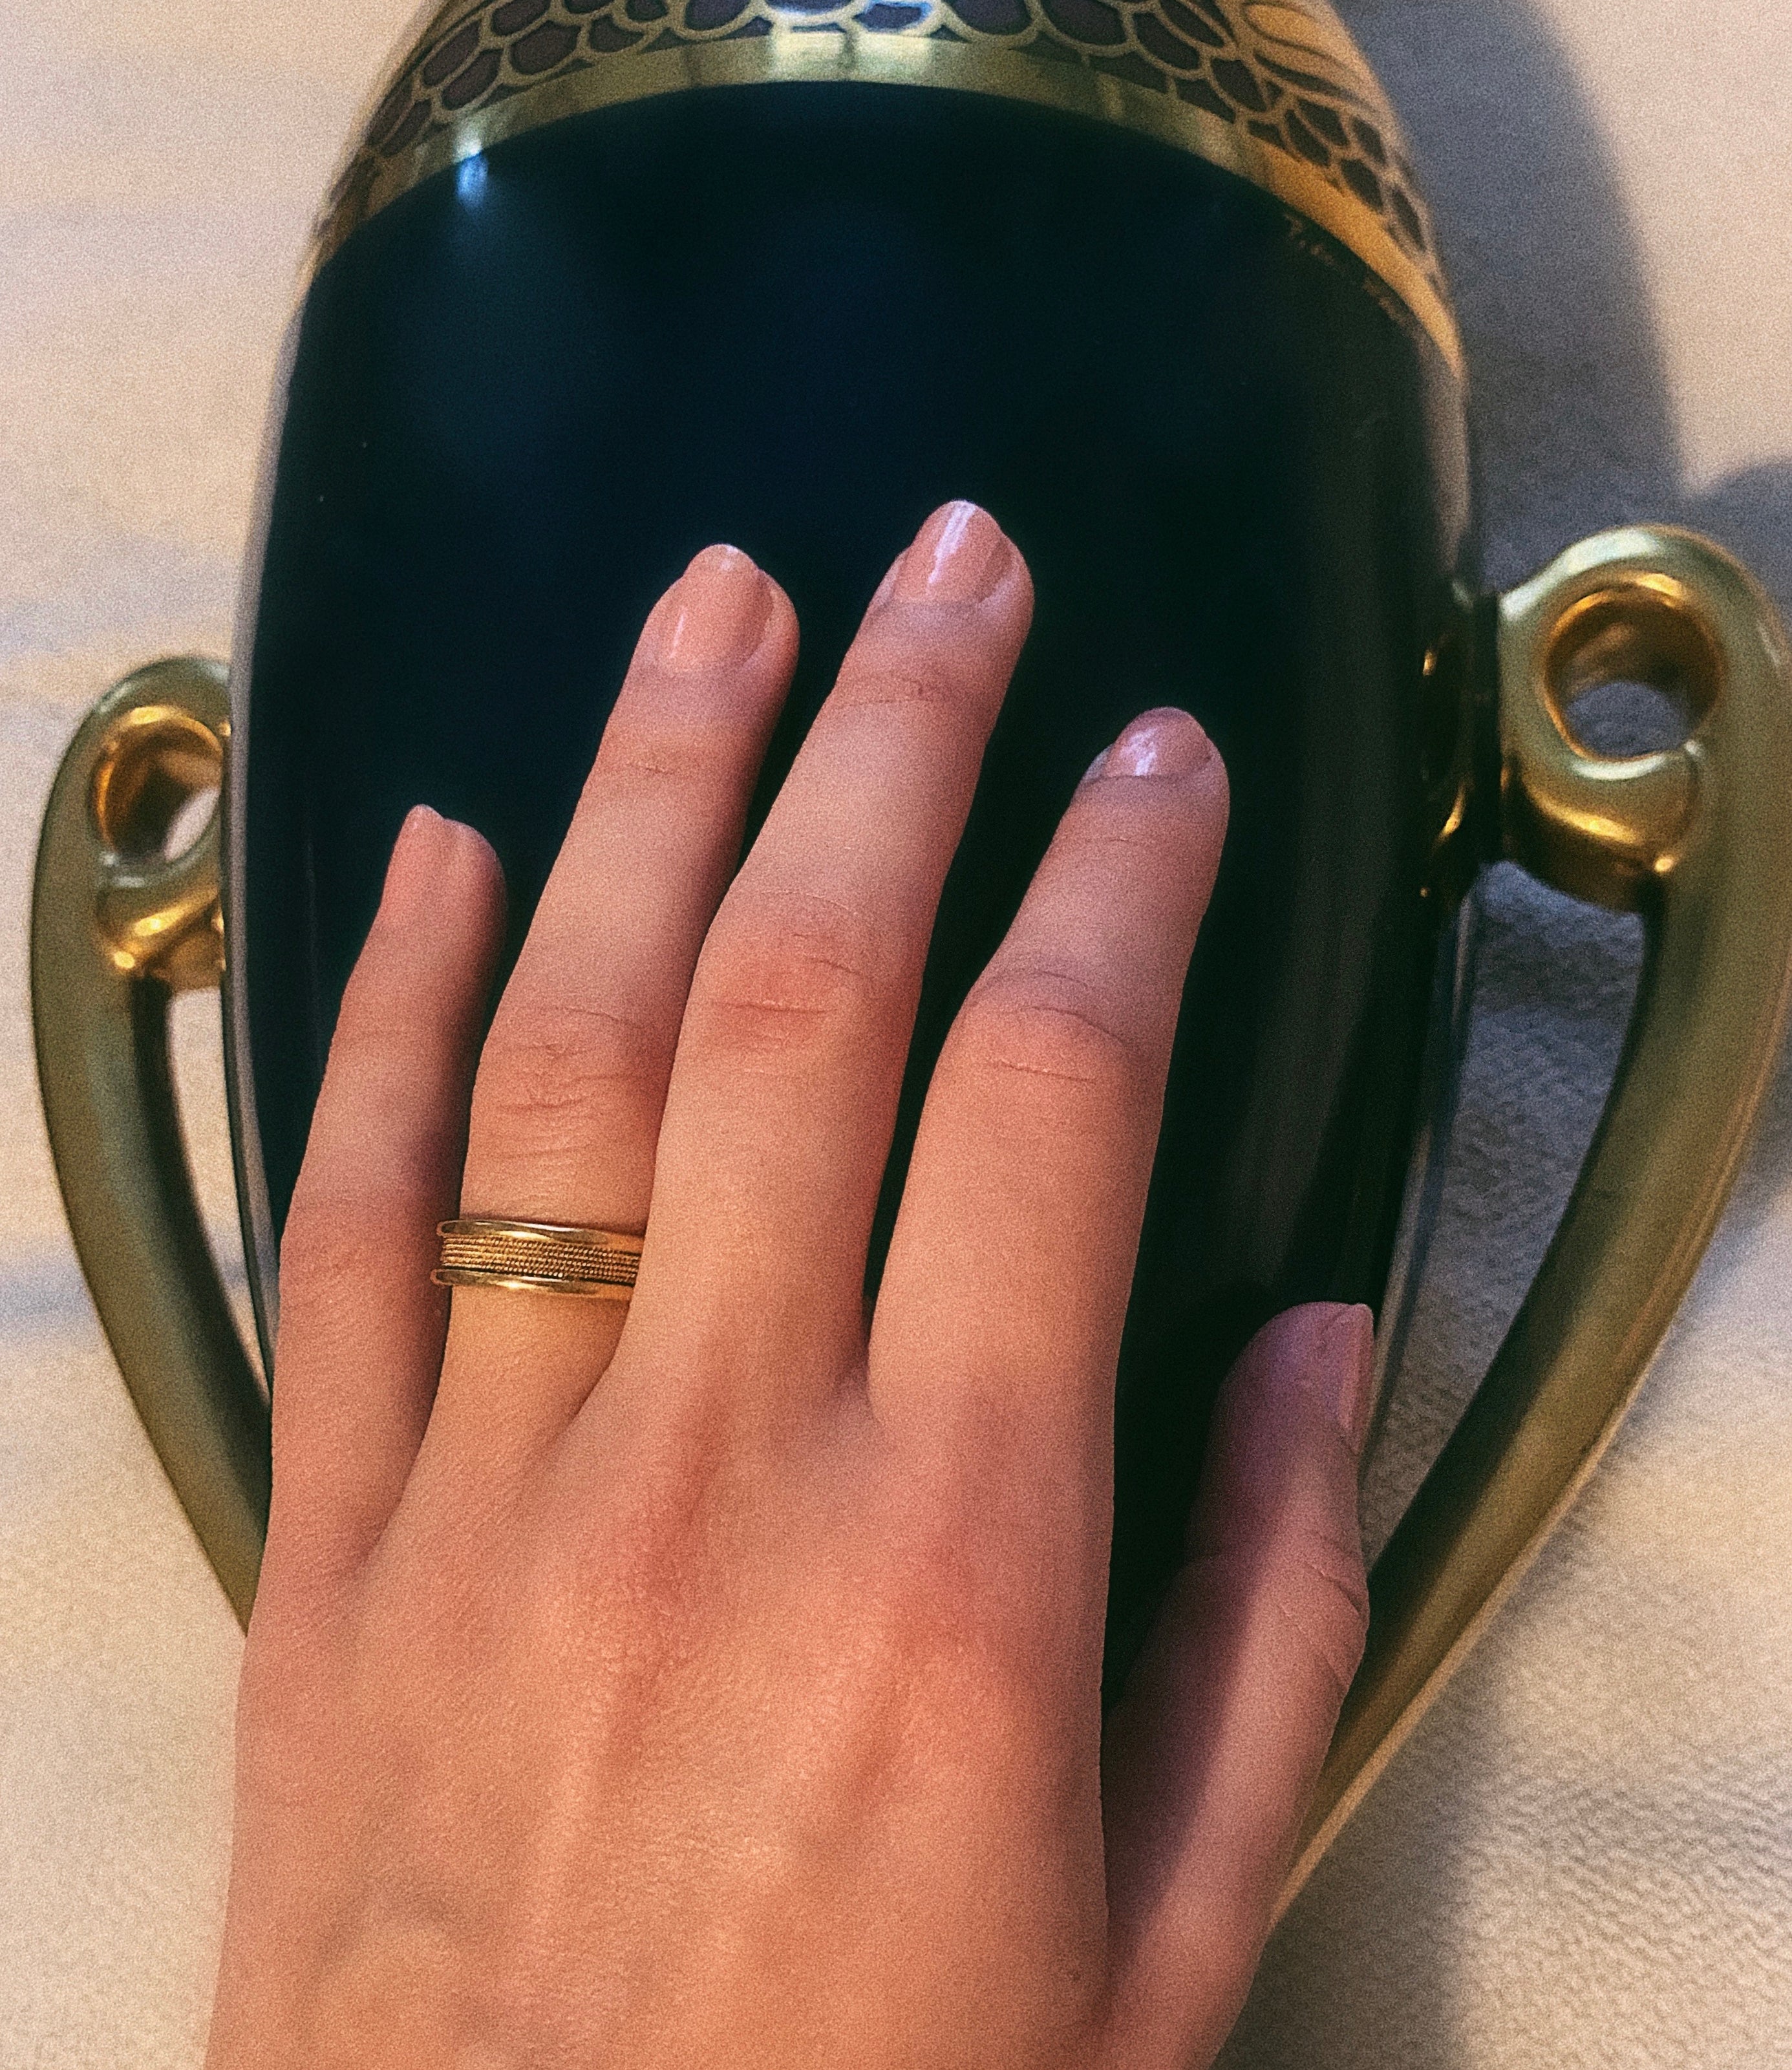 BADETTE Ring - Filigree - Gold-plated silver | MEA AYAYA